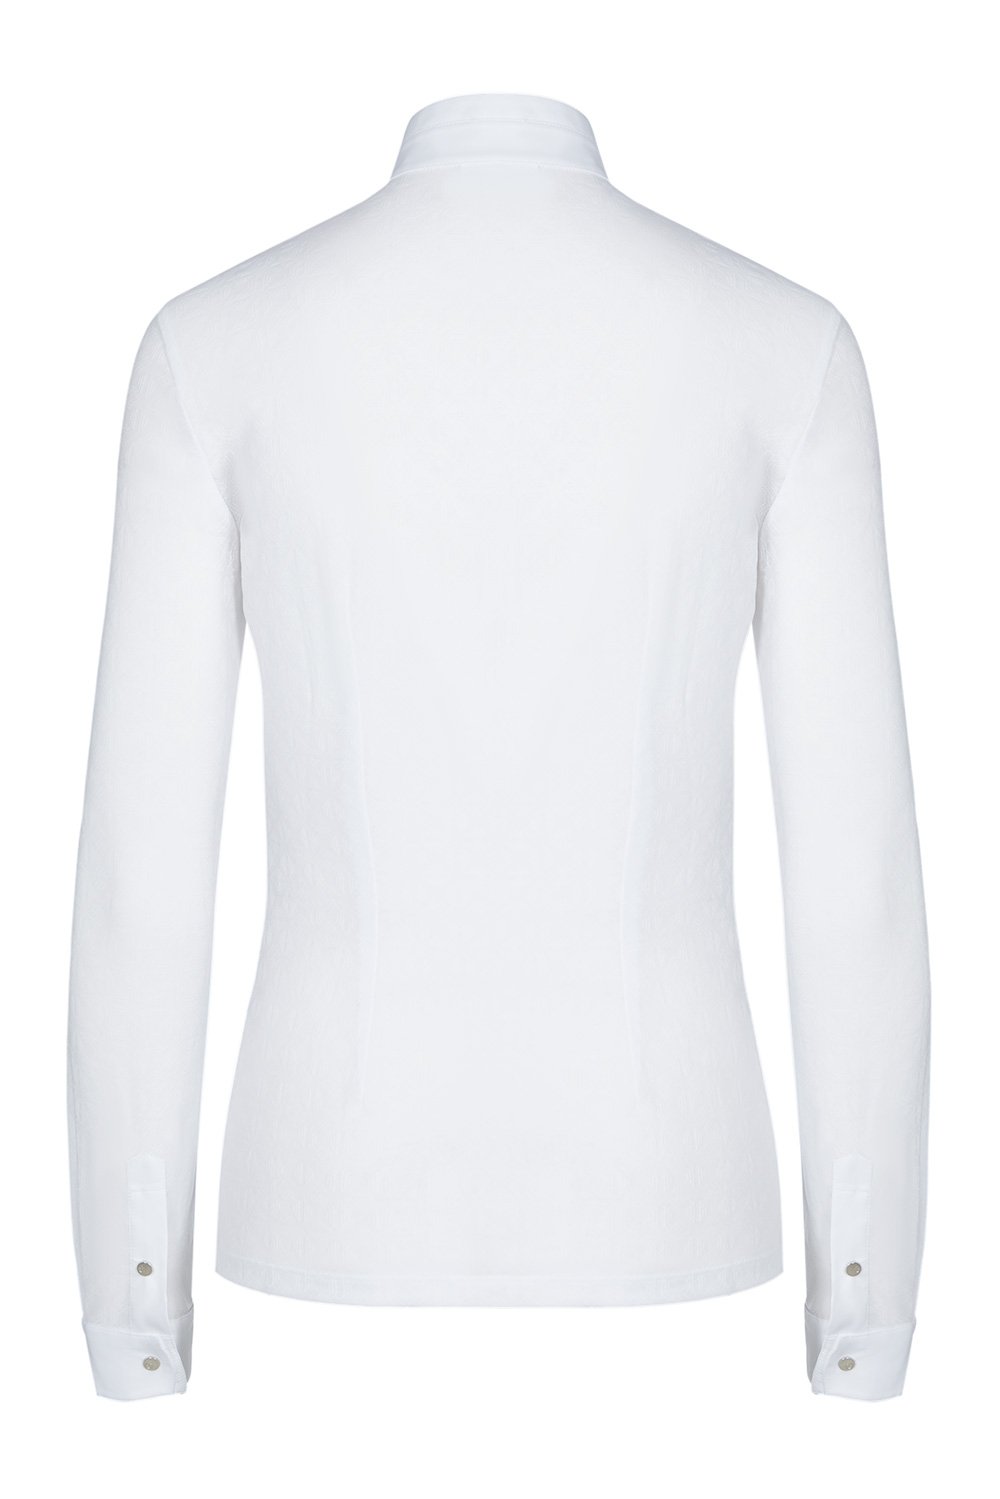 Cavalleria Toscana Transparent Jersey Elegant Competition Long Sleeve Shirt - New!